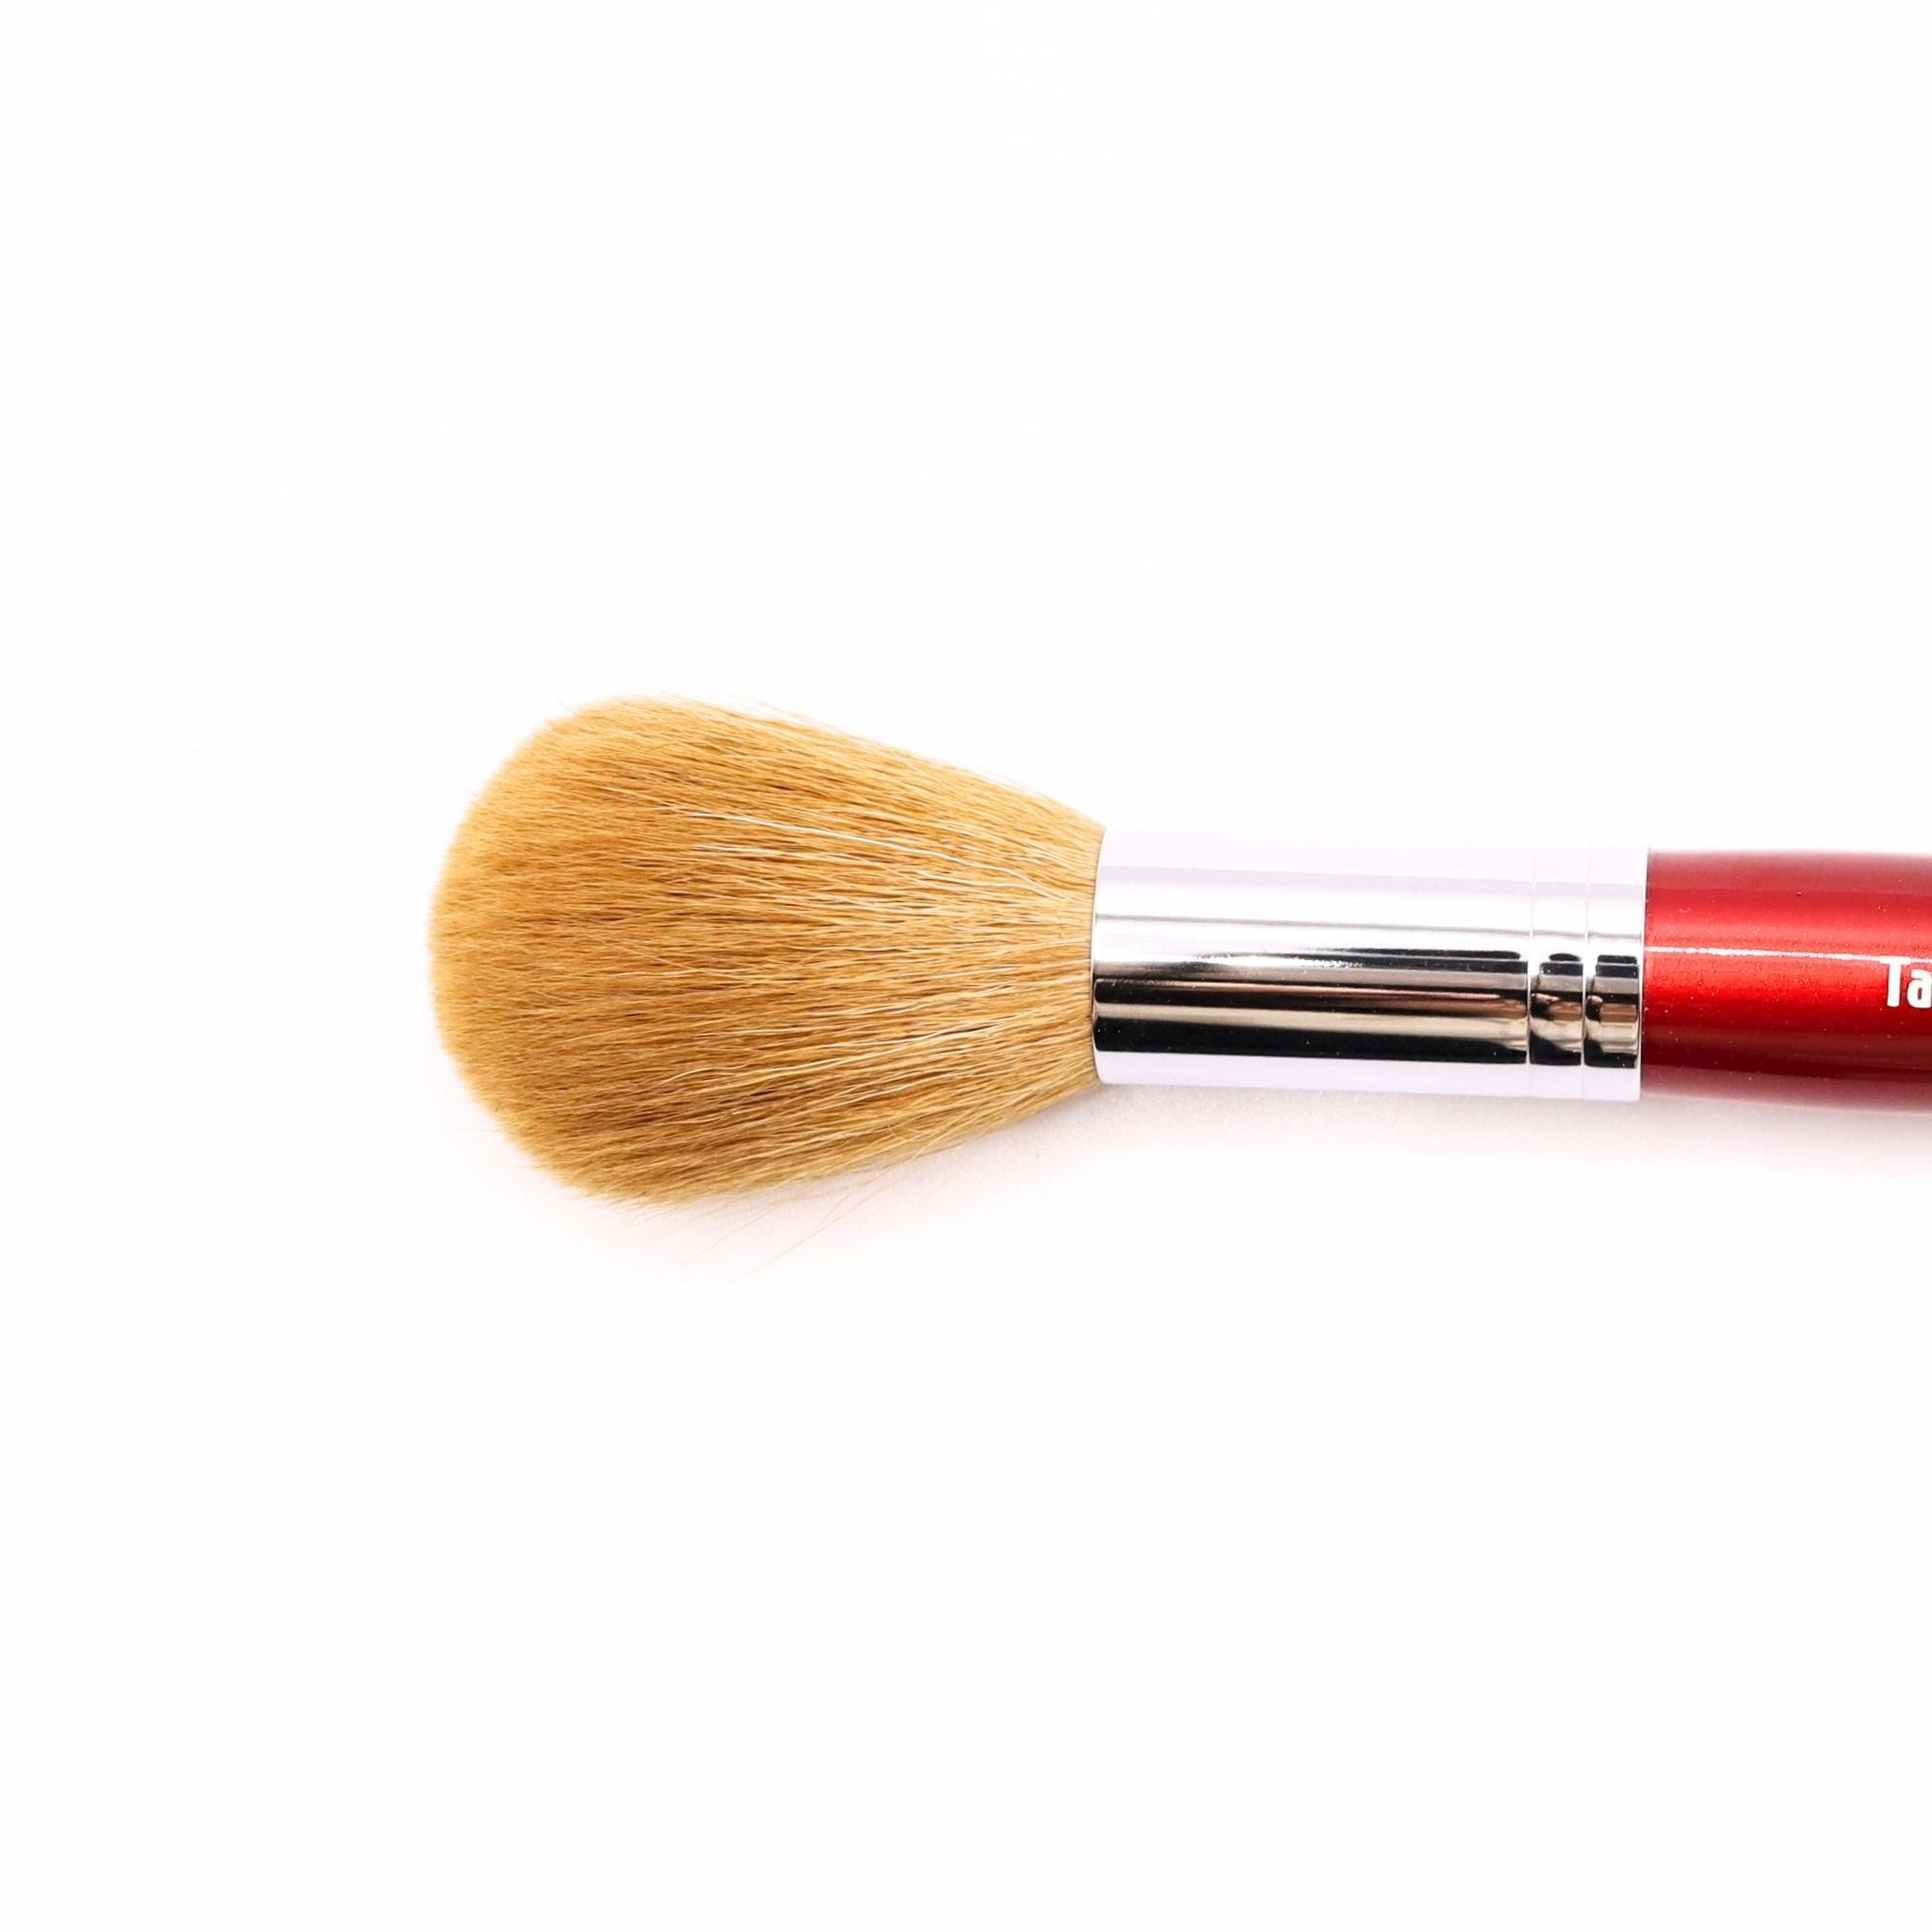 Tanseido AKA 赤 Series WC20T Cheek Brush (Regular Collection) - Fude Beauty, Japanese Makeup Brushes